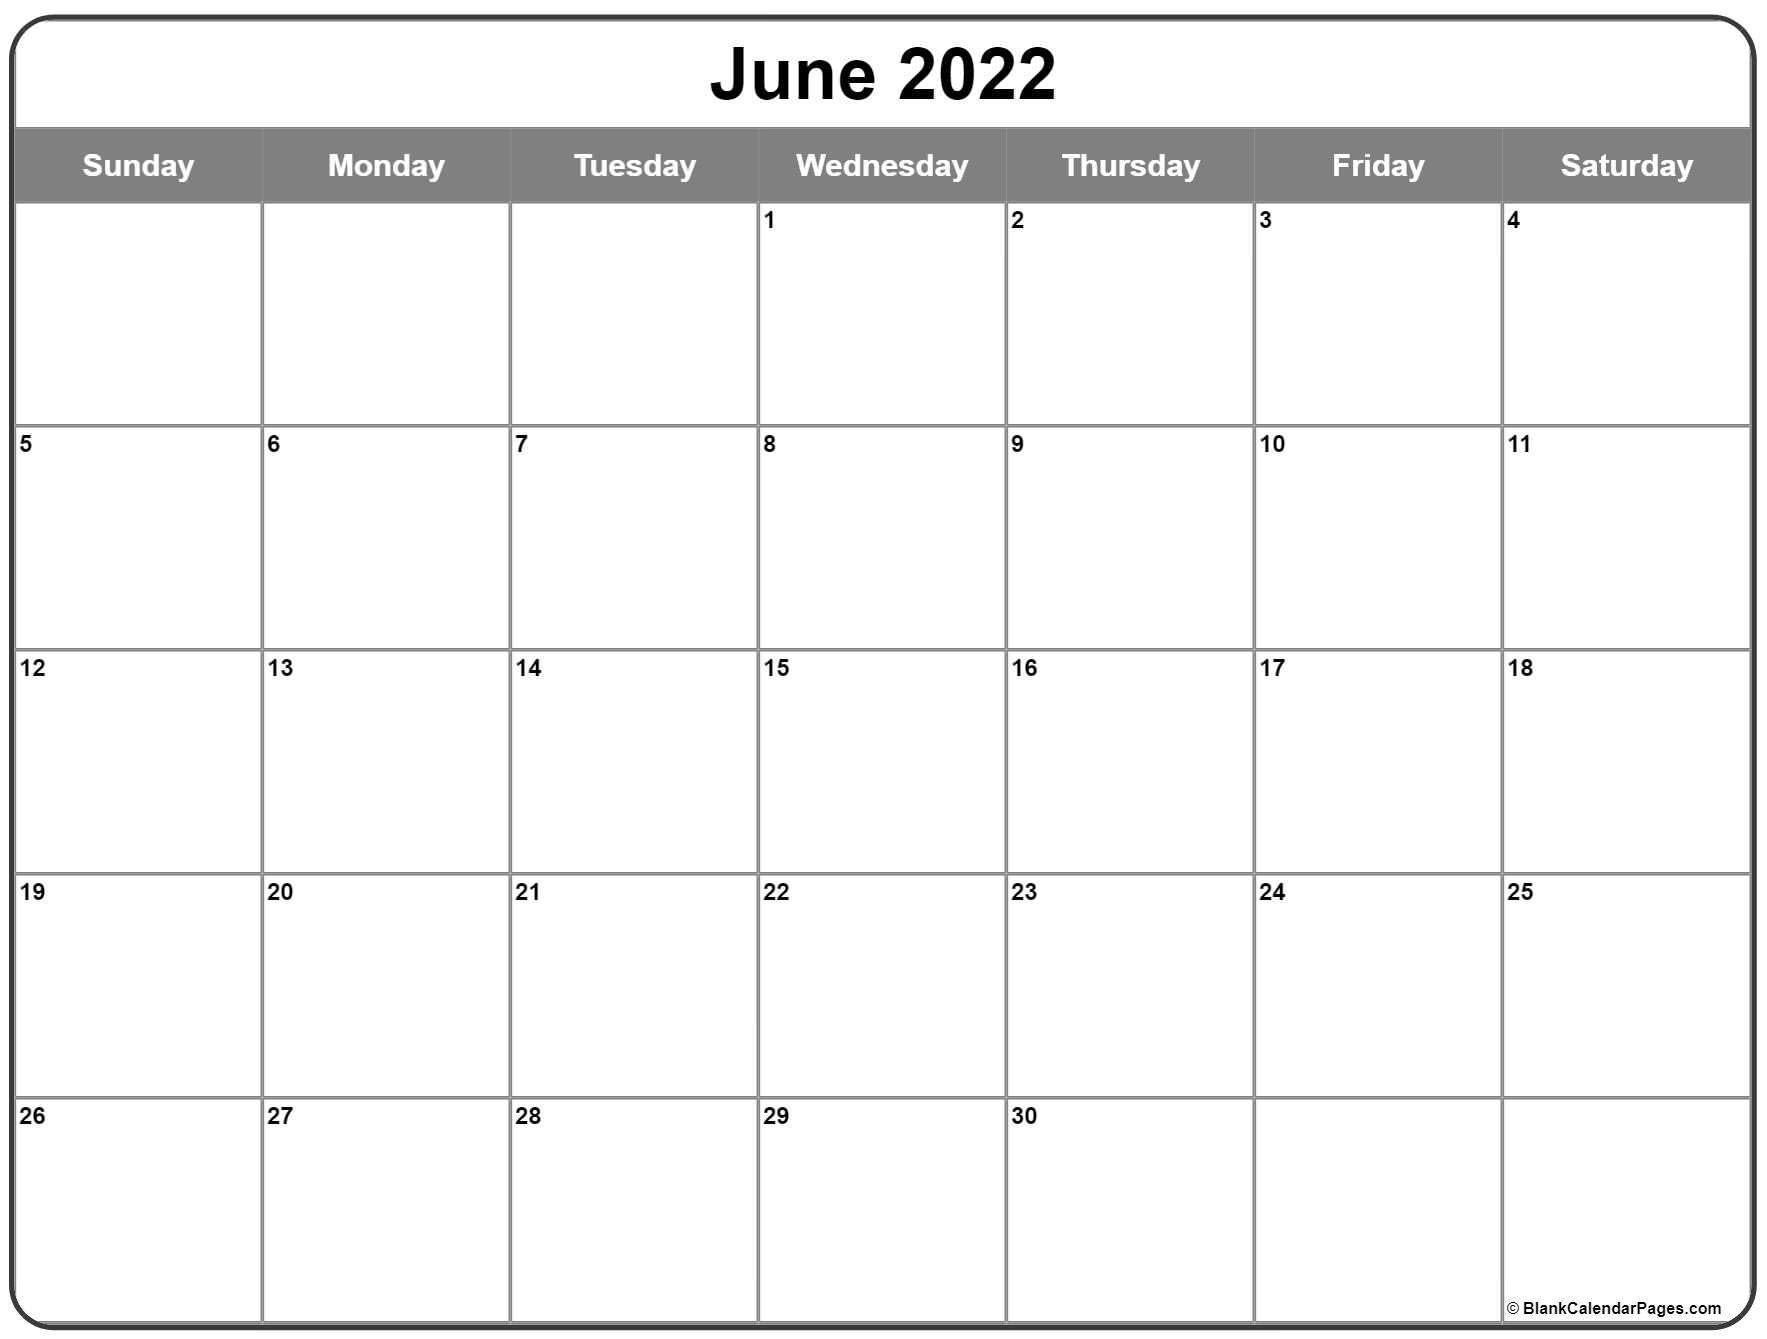 Get 2022 Calendar For June